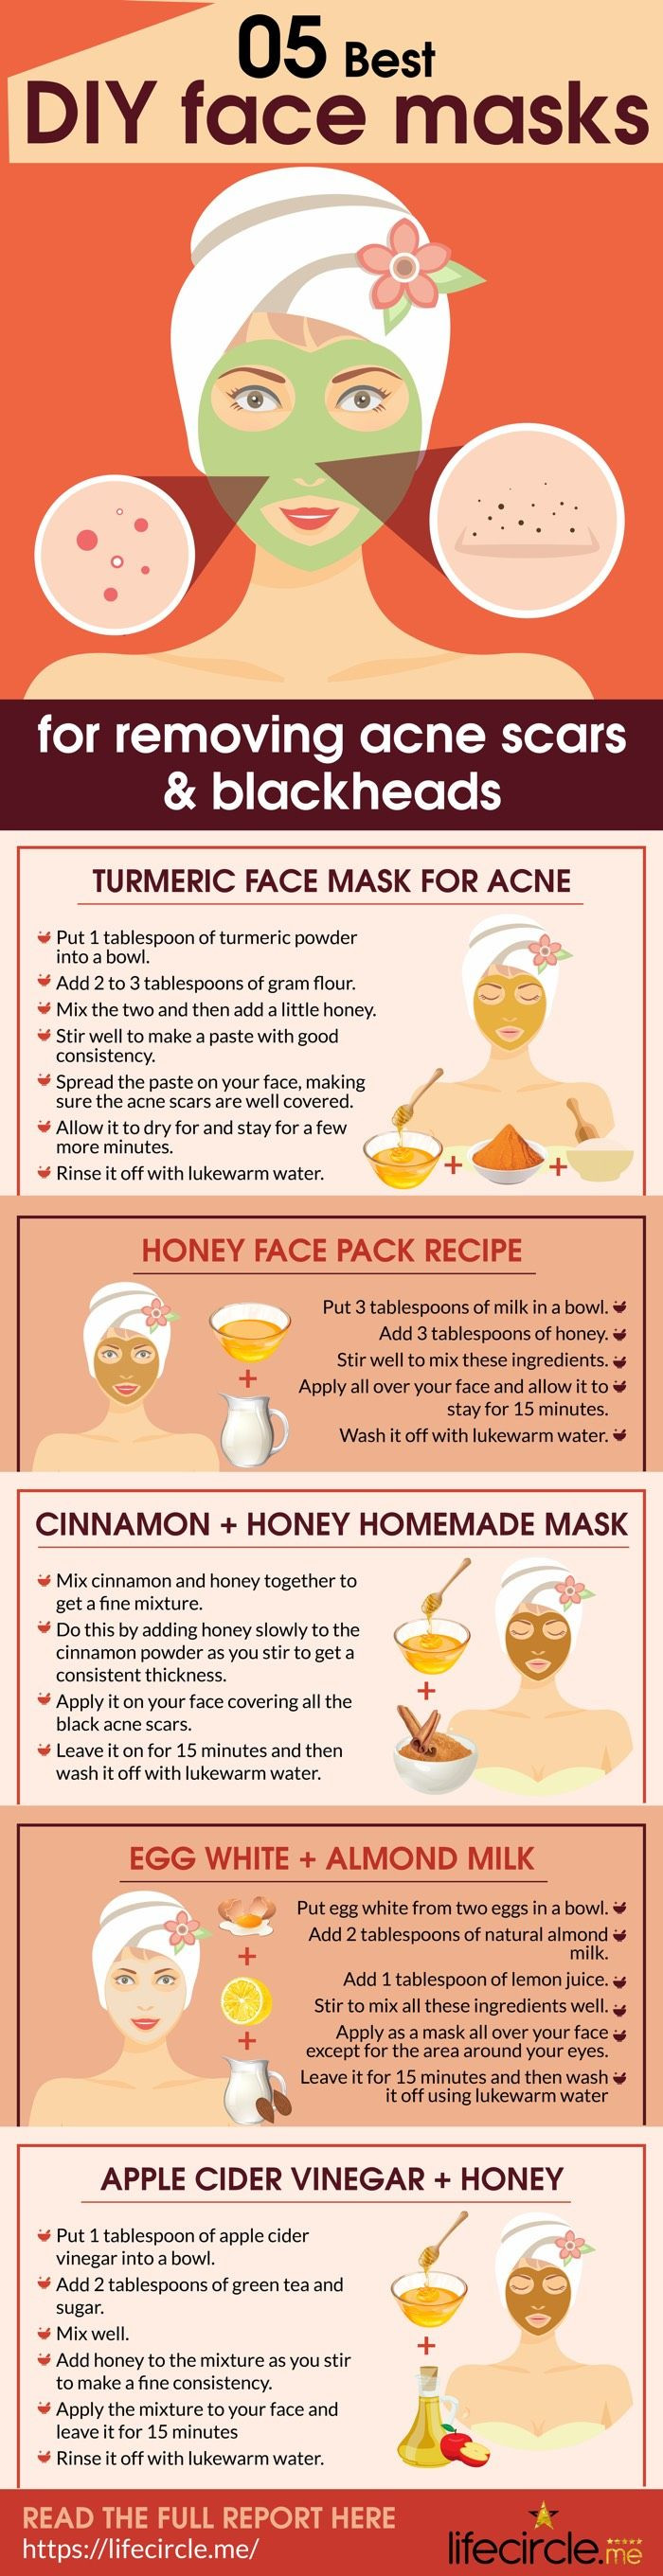 Face Mask For Acne DIY
 10 Best Face Masks for Acne Scars Drugstore & DIY